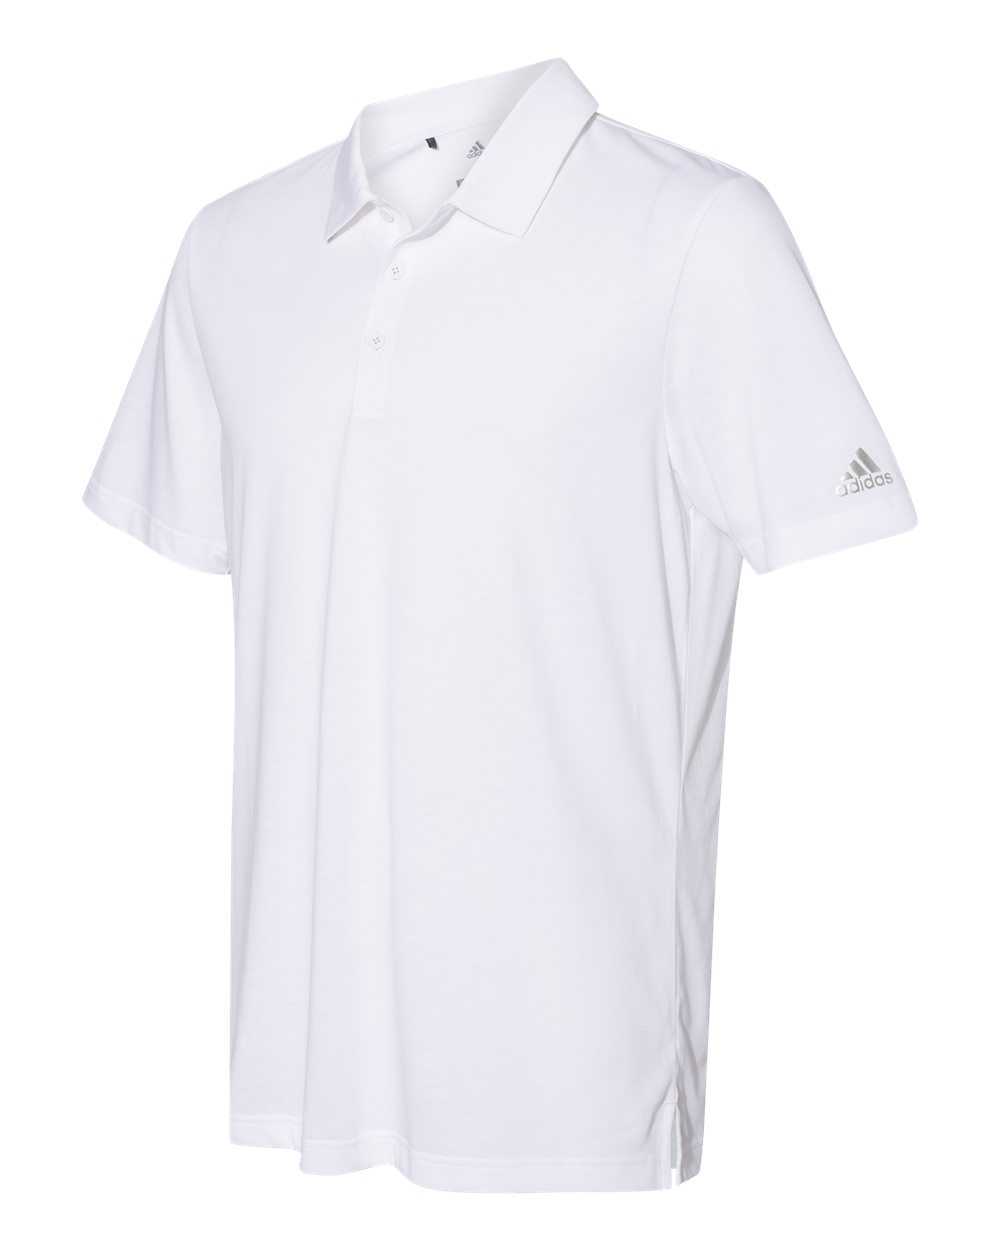 Adidas A322 Cotton Blend Sport Shirt - White - HIT a Double